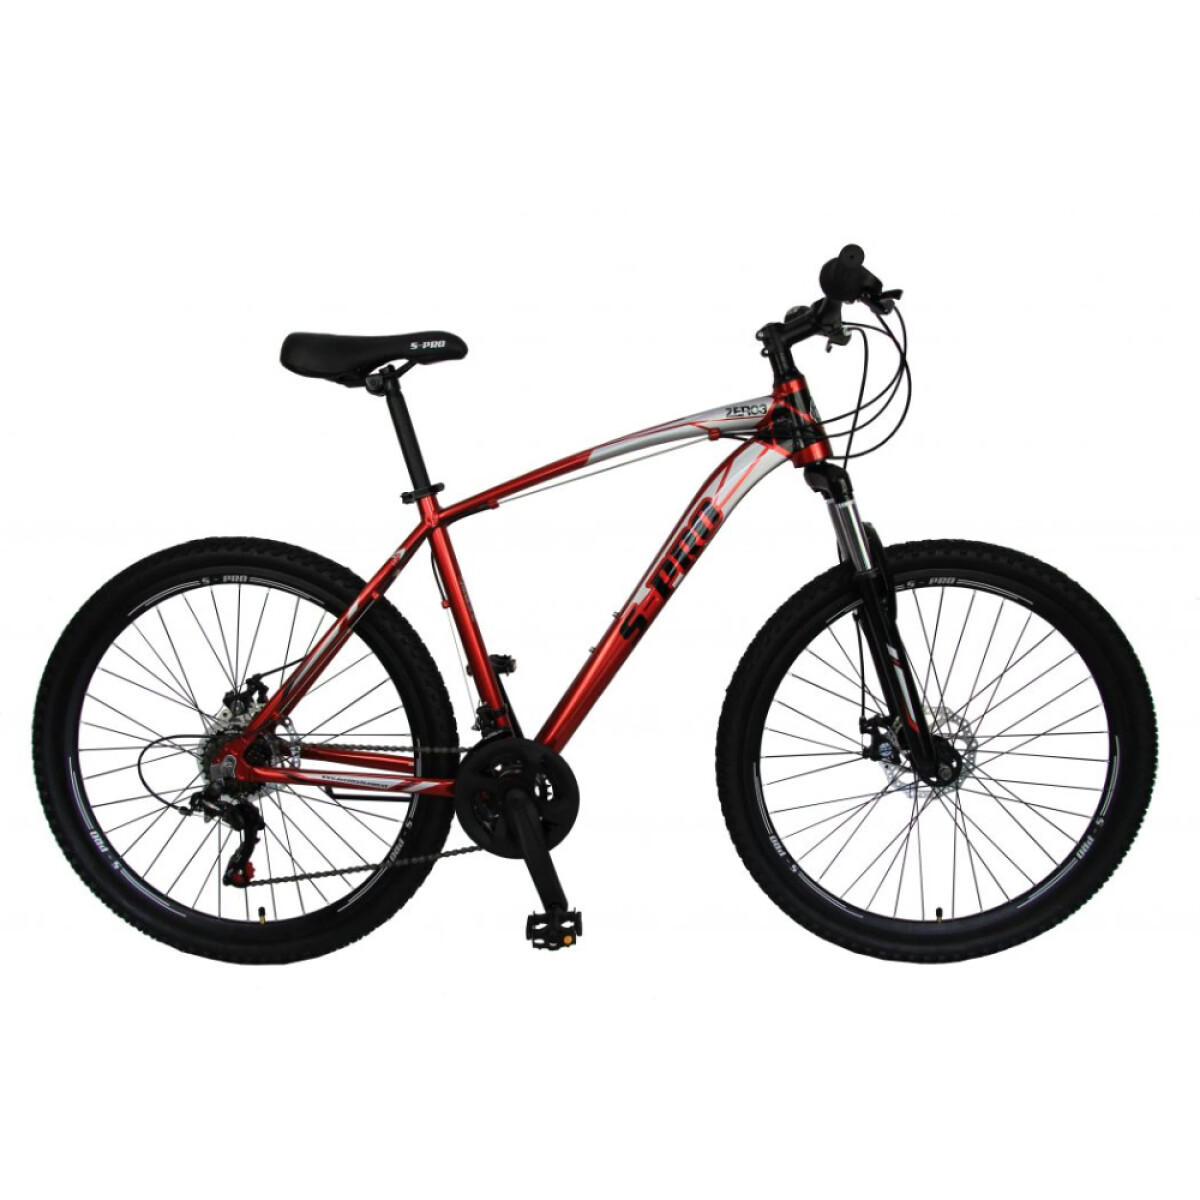 Bicicleta S-Pro Zero3 27.5 Man - Rojo y Gris 